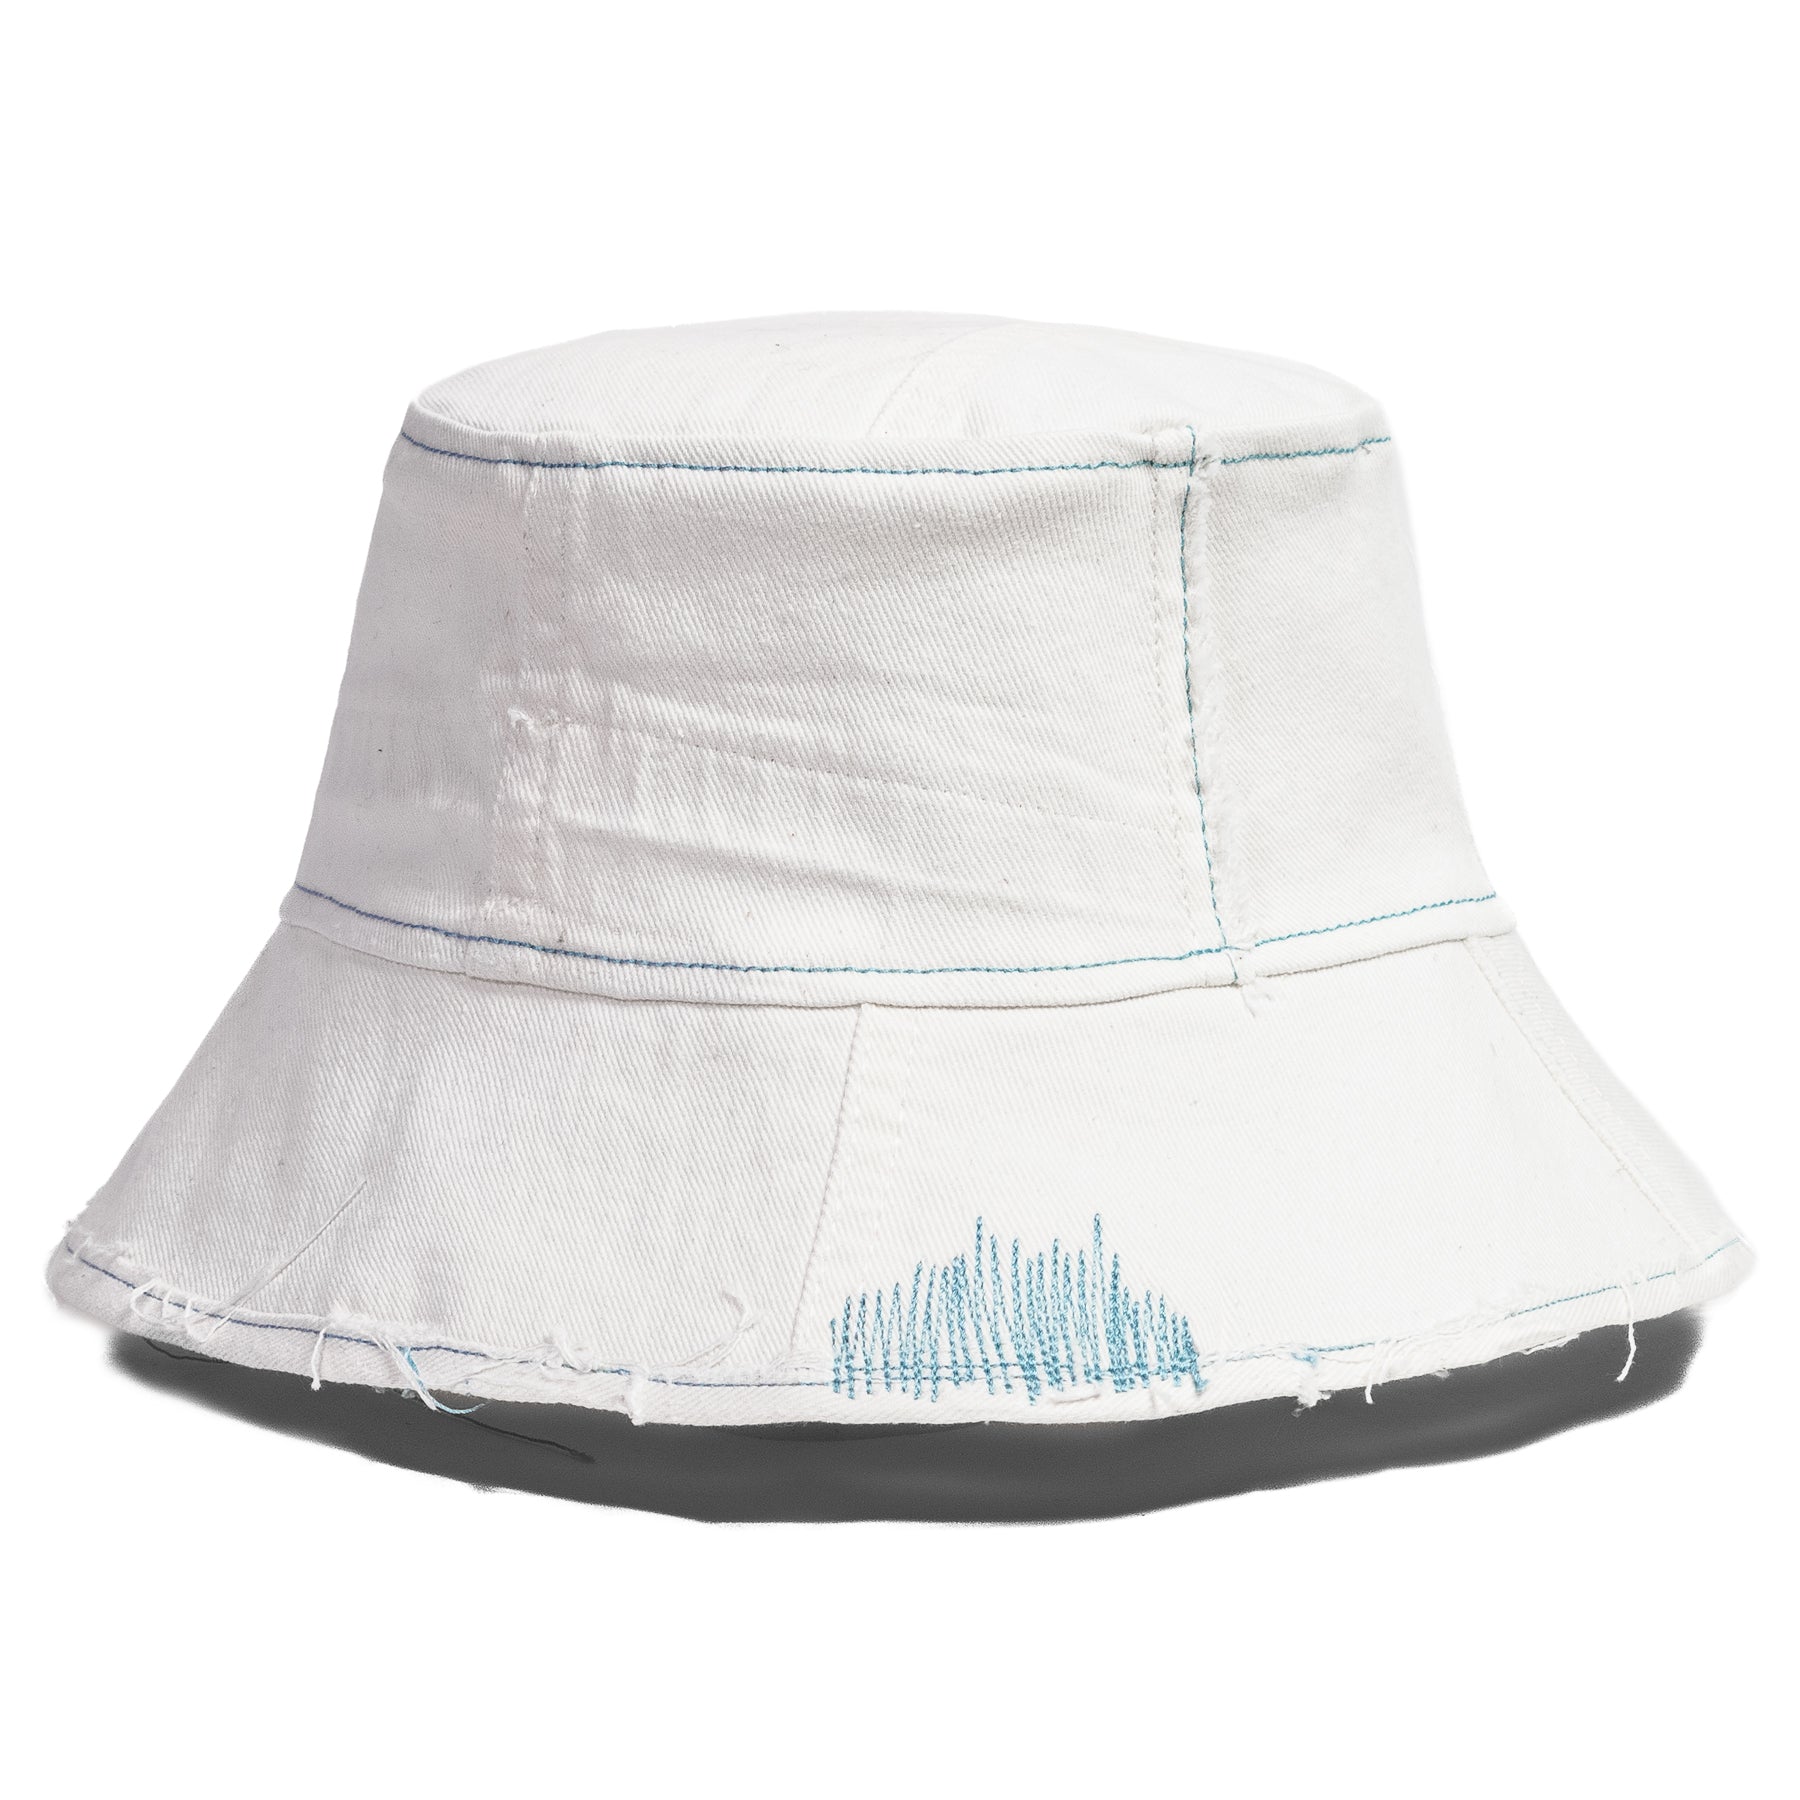 Mursaki Denim Chop Shop Bucket Hat - White/Snake